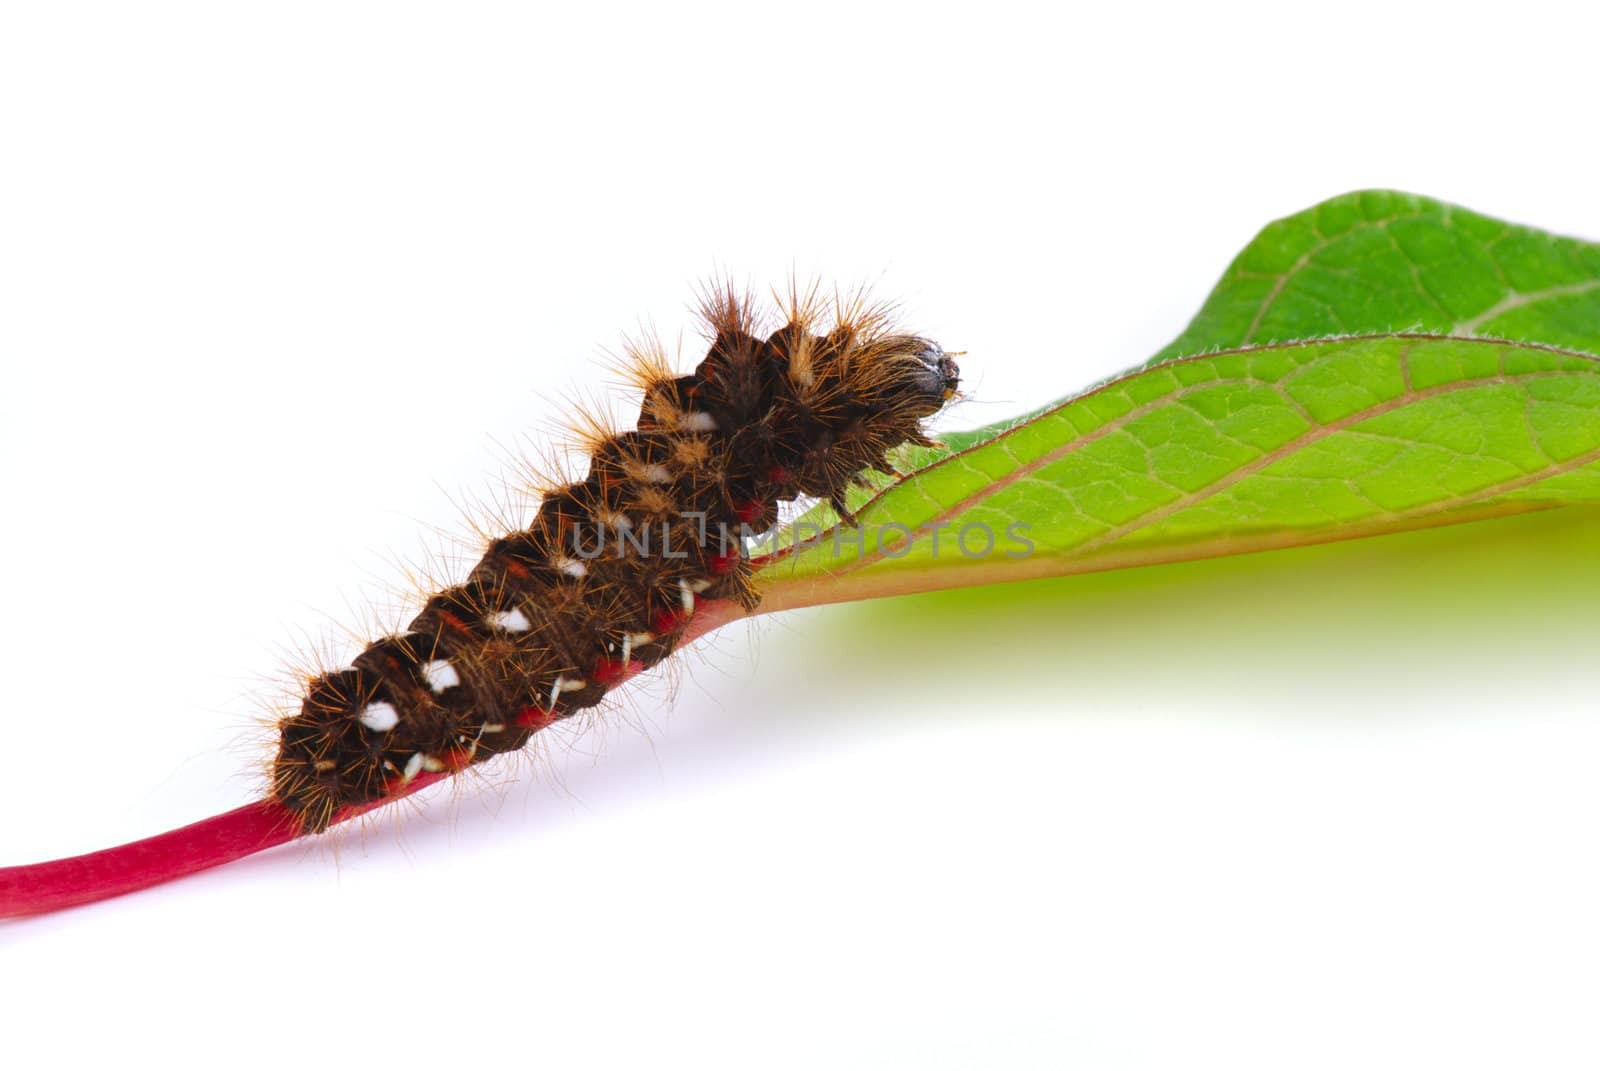  Shaggy caterpillar on green leaf. A close up.